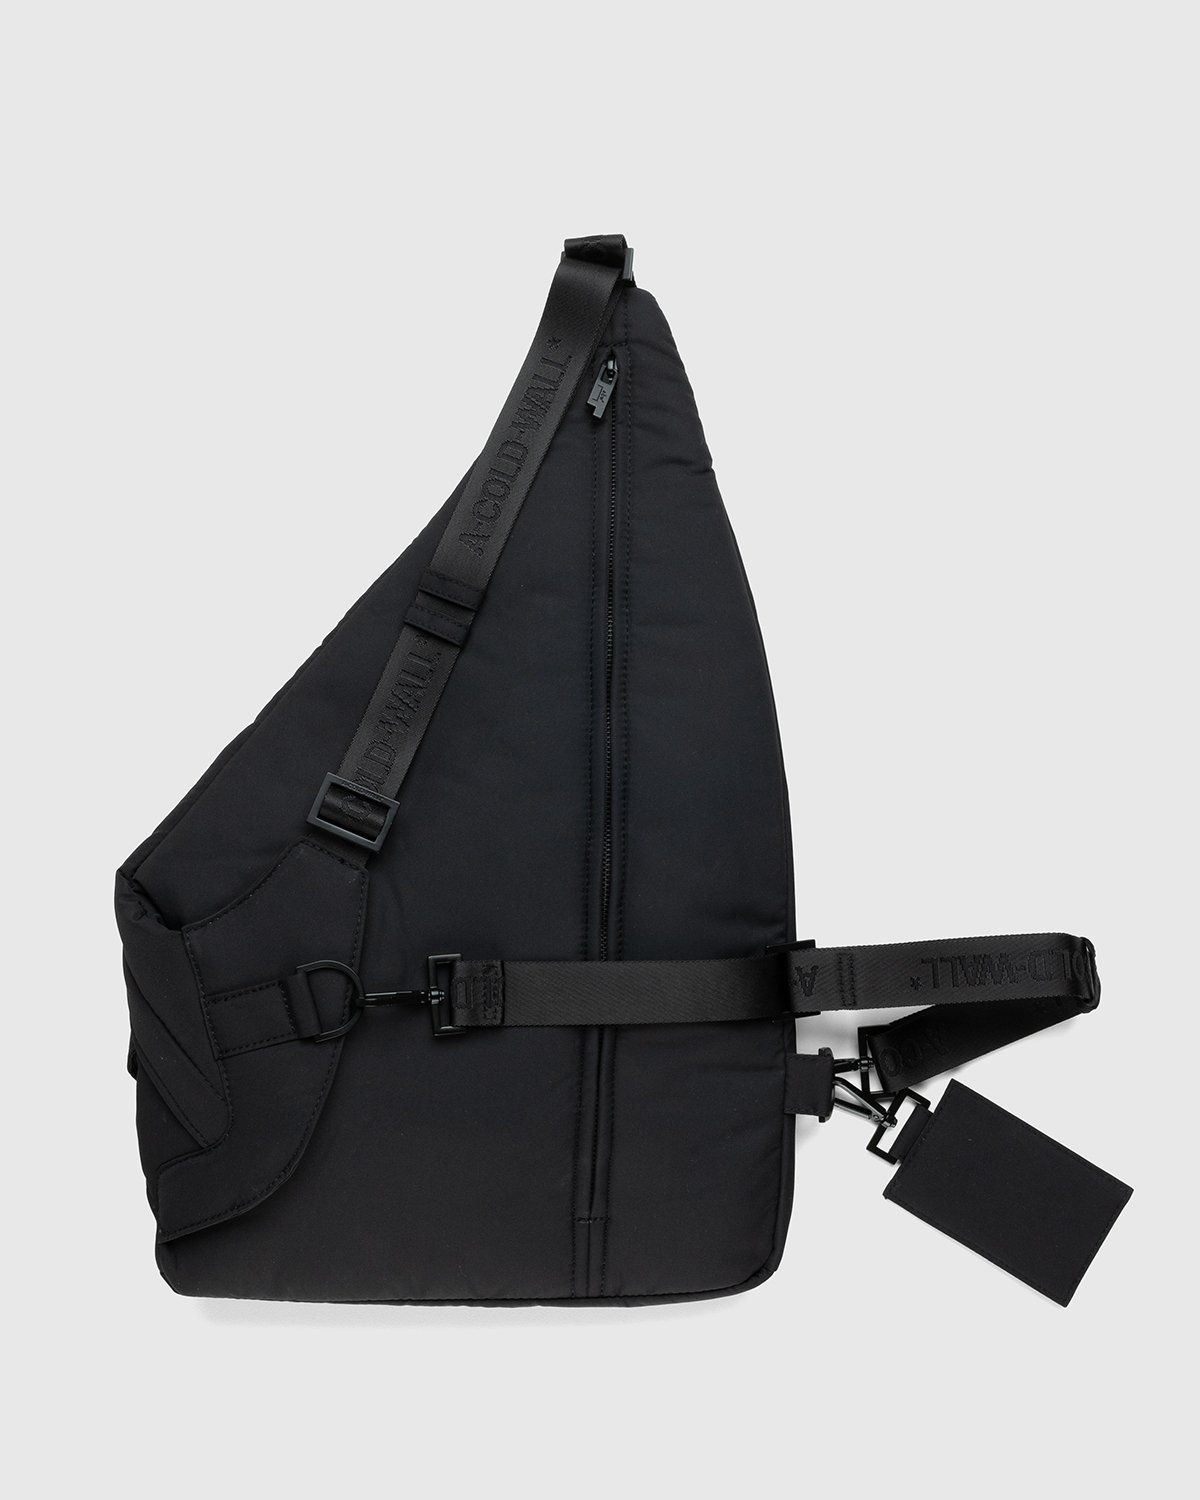 A-Cold-Wall* - Semi Gilet Body Bag Black - Accessories - Black - Image 2